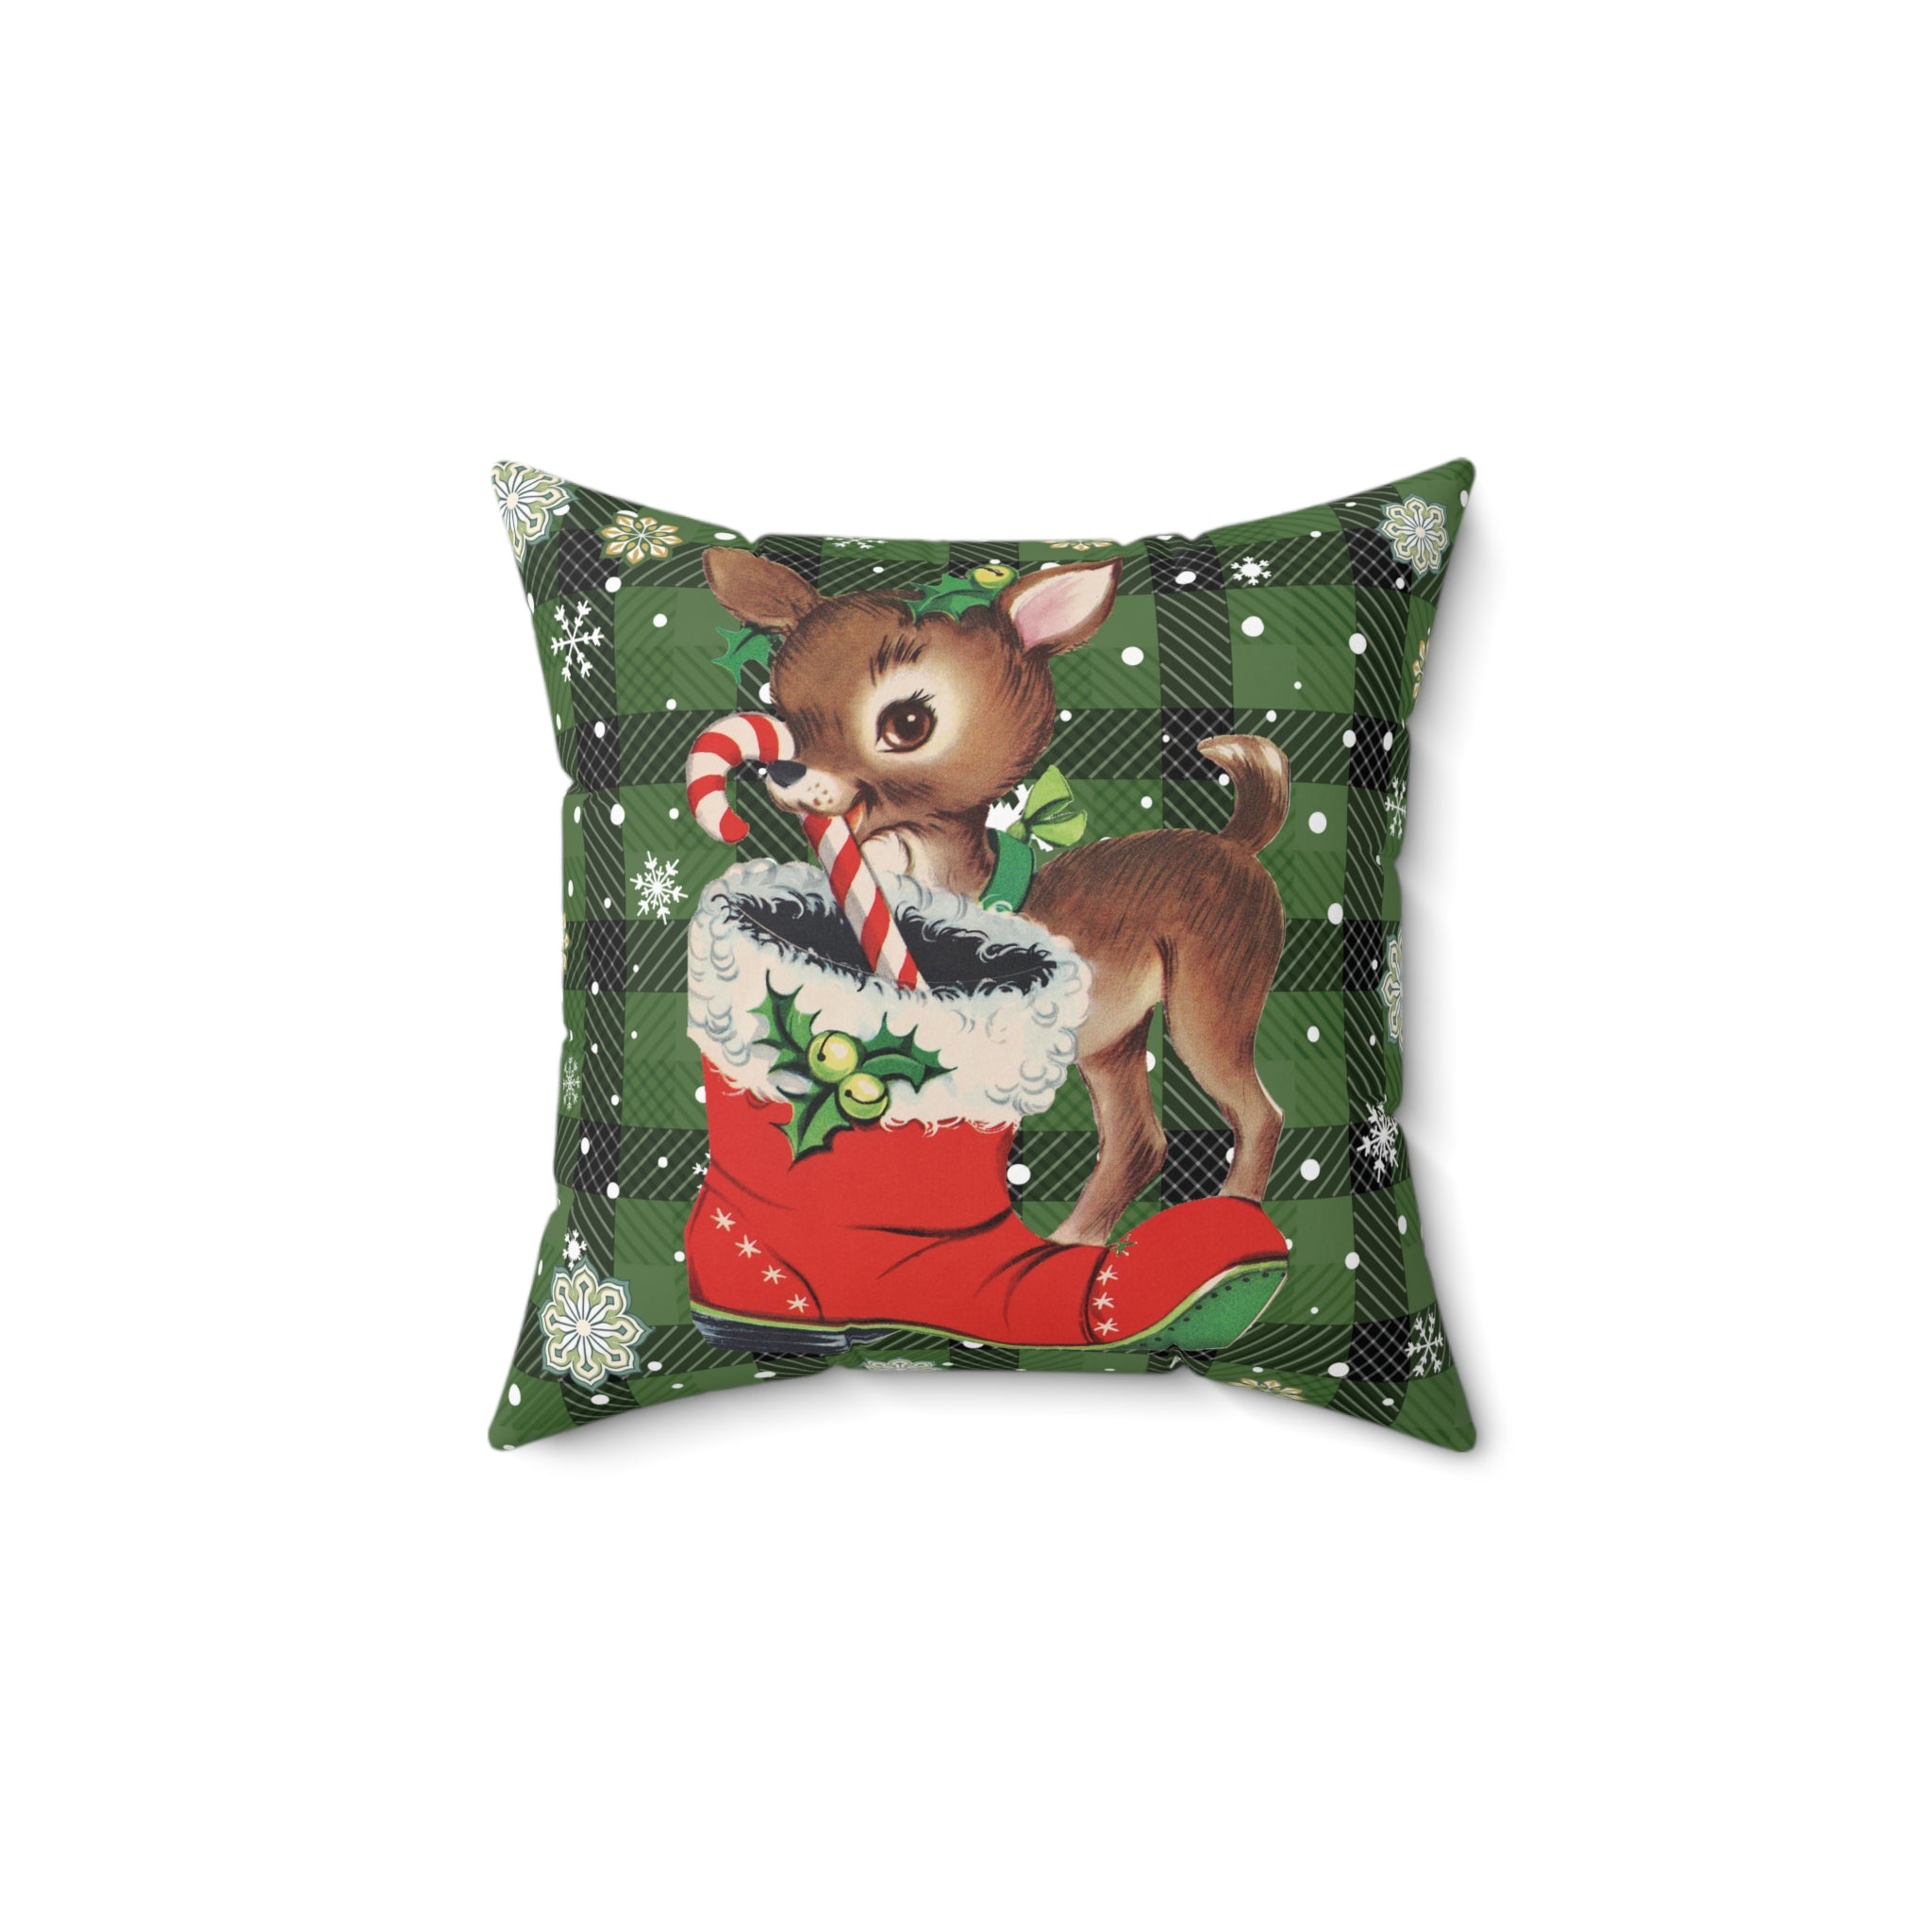 Retro 50s Christmas Vintage Reindeer MCM Green Throw Pillow